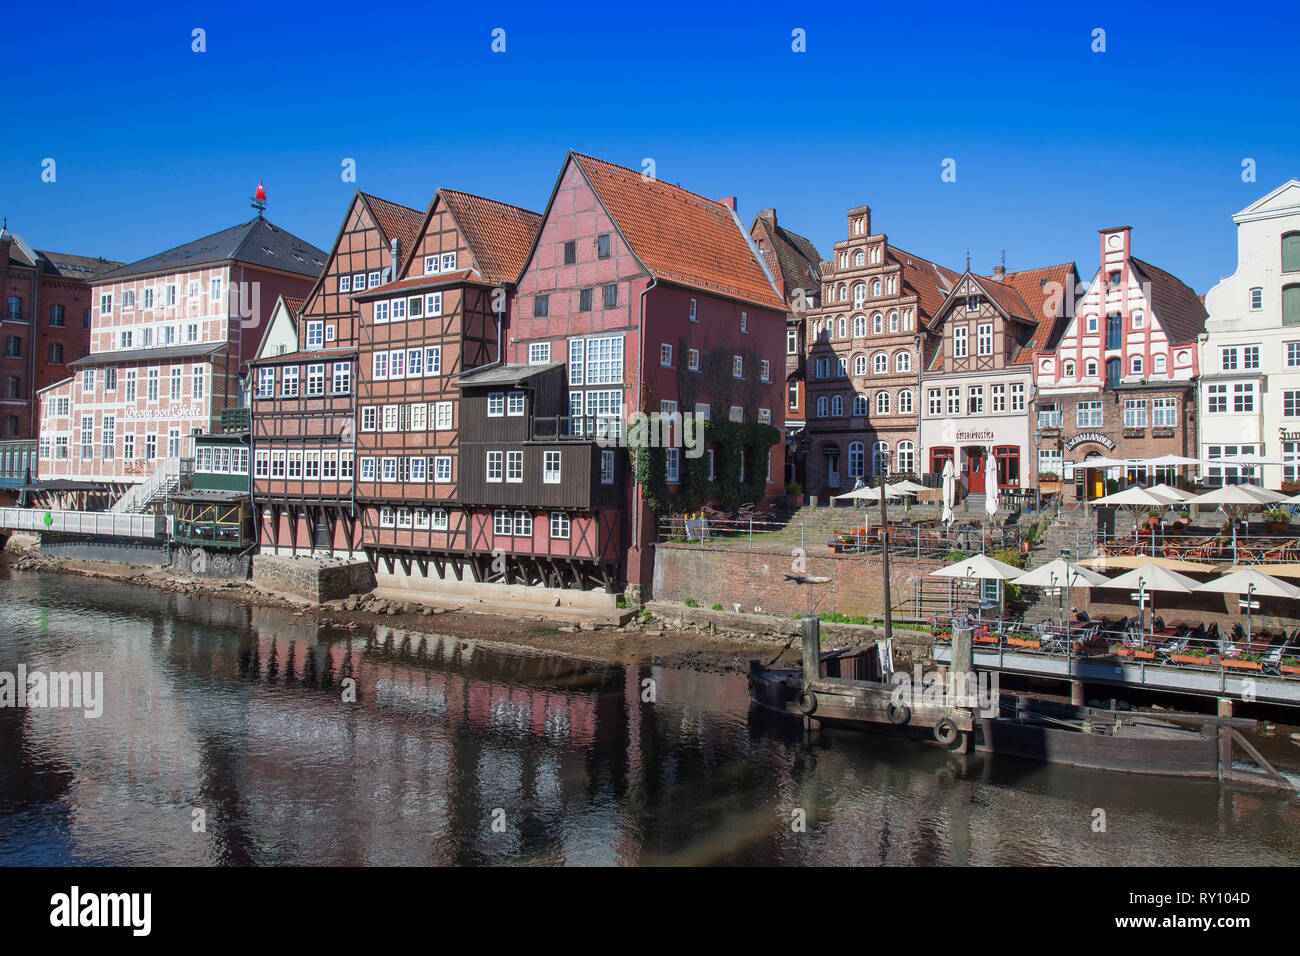 old town of Luneburg on the Ilmenau, Lueneburg, Germany Stock Photo